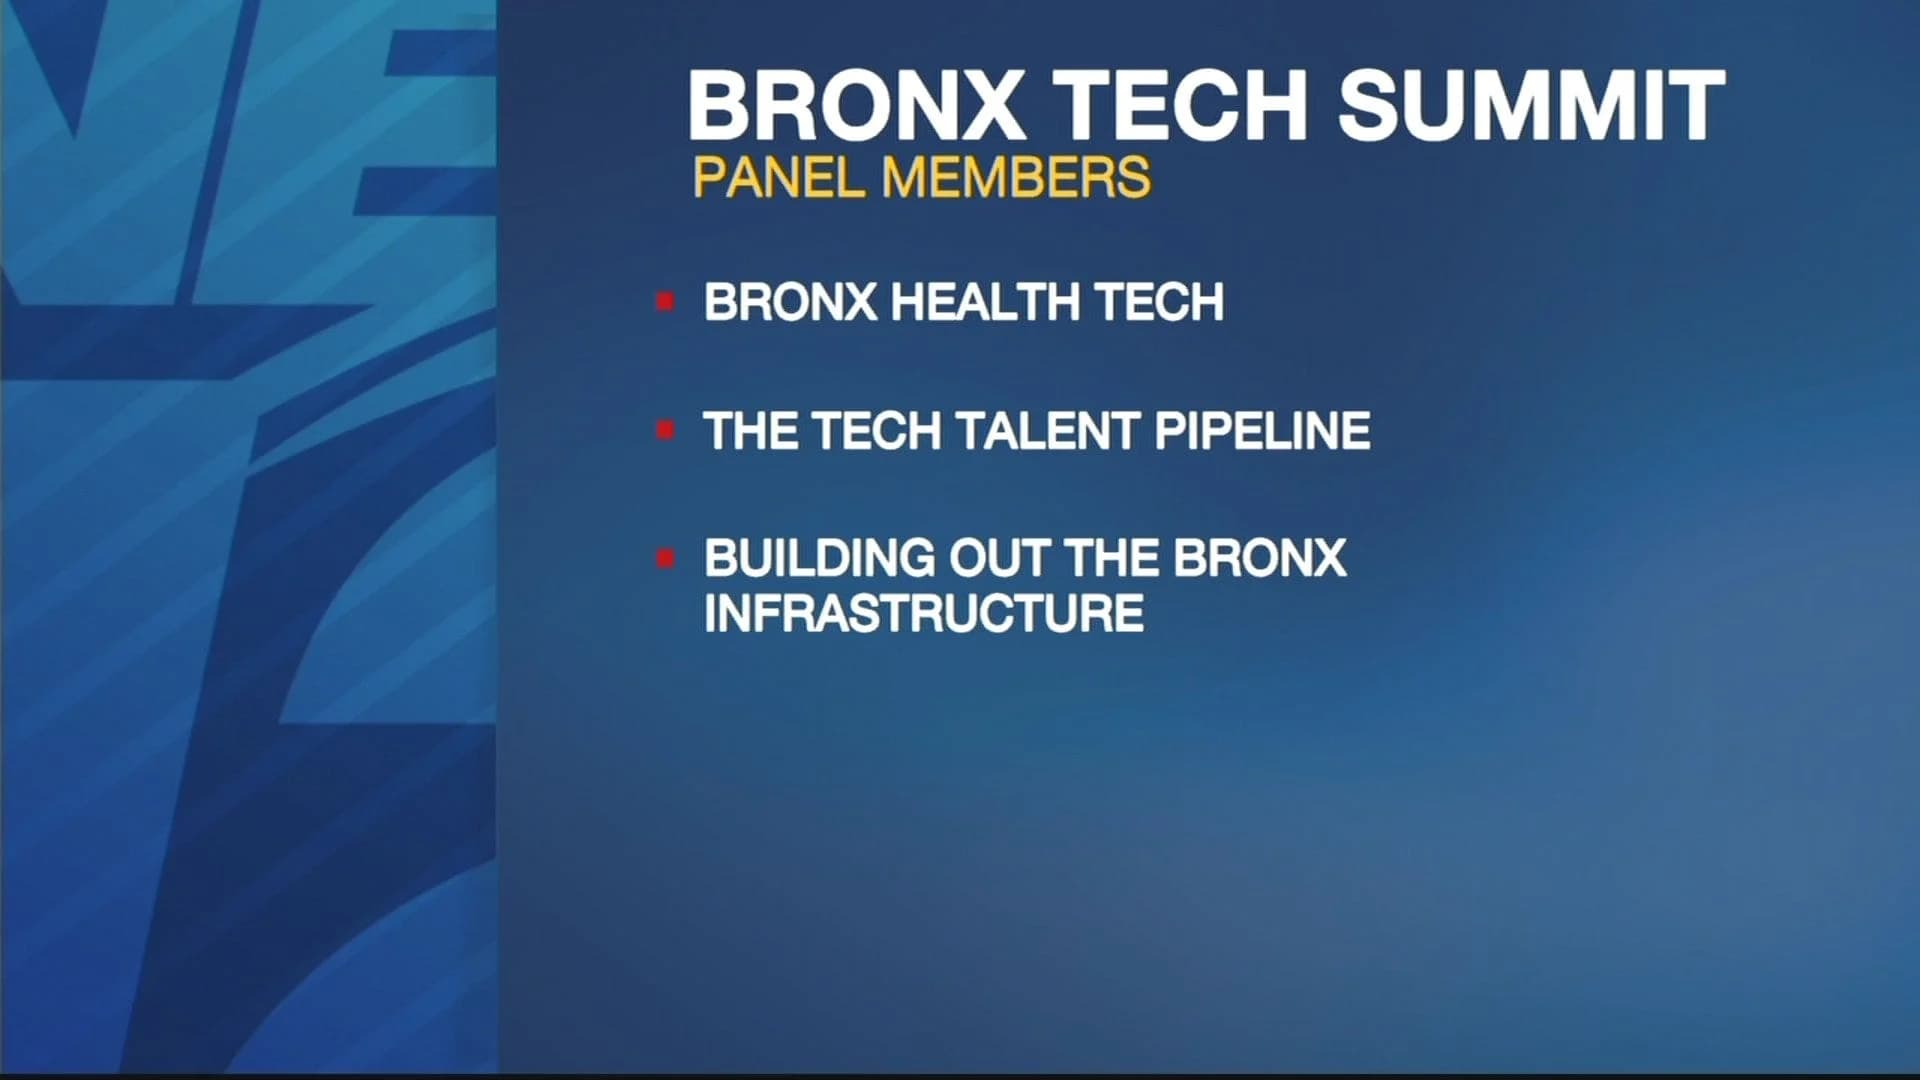 Bronx tech Summit held at Metropolitan College